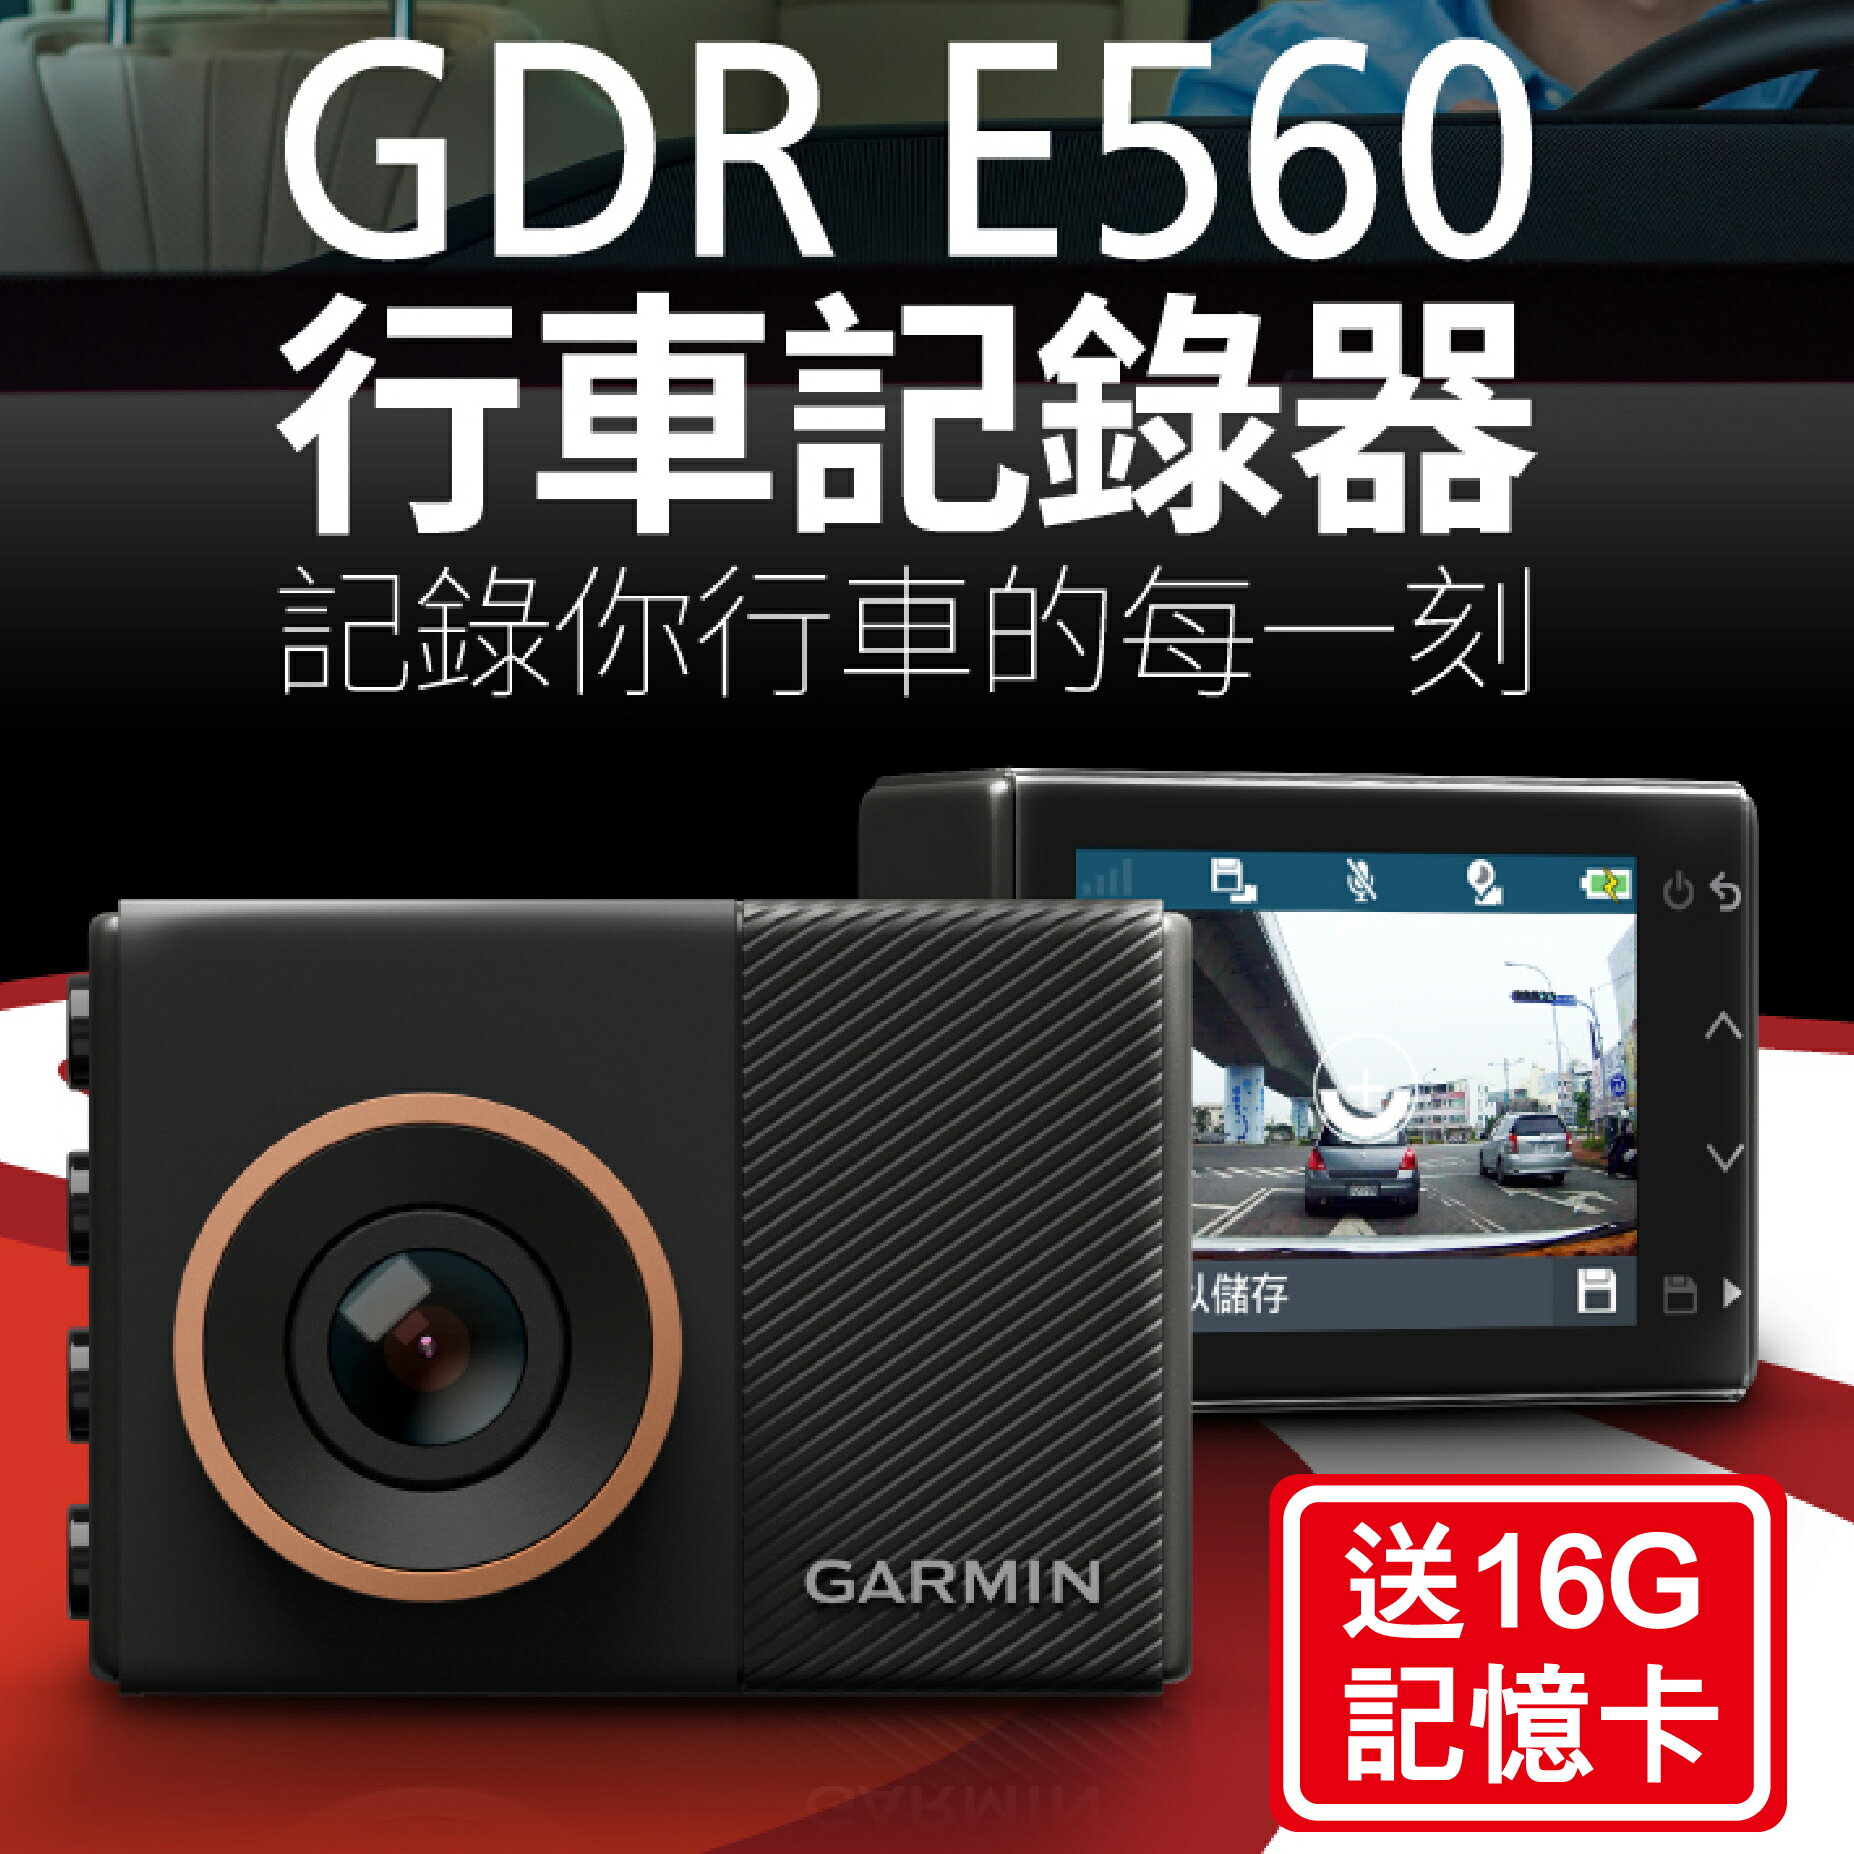 【Ace店熱銷款】GARMIN GDR E560 行車記錄器 送16G記憶卡 (0753759183974)